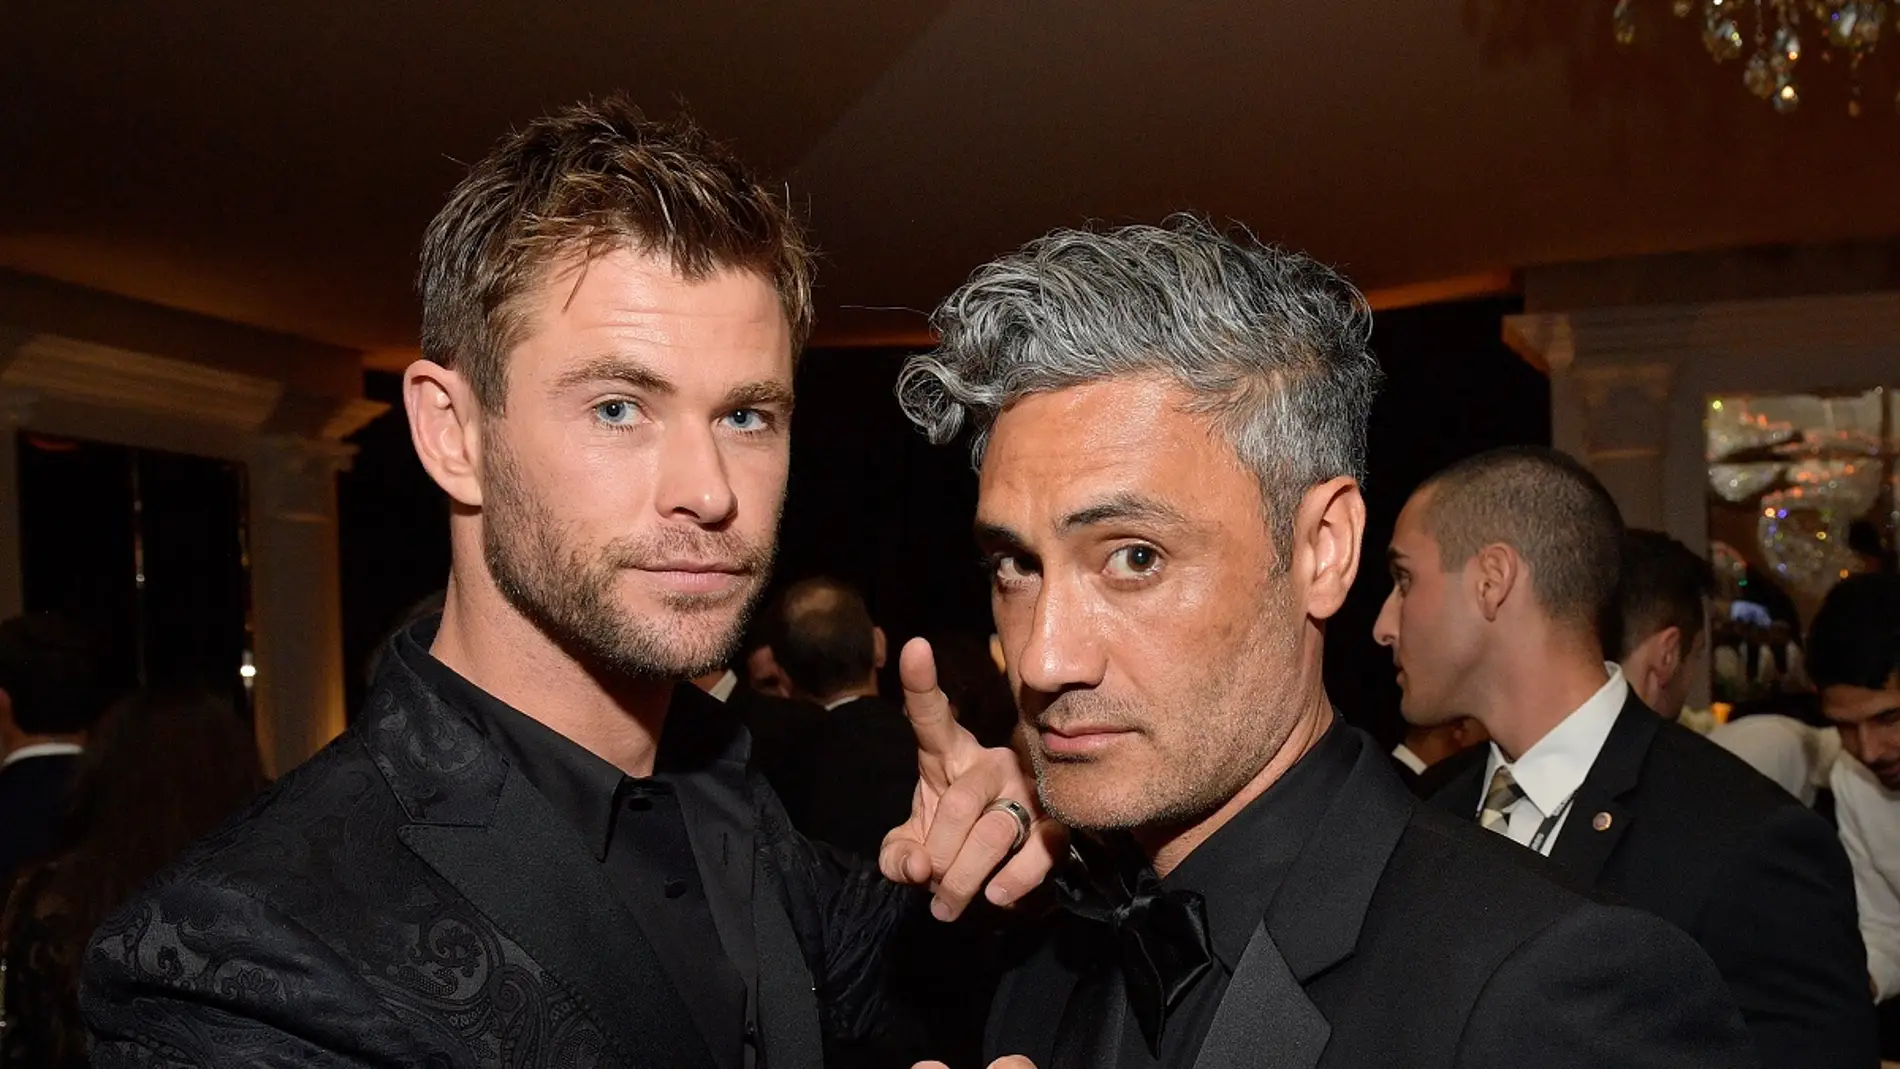 Chris Hemsworth
Taika Waititi
Thor
Ragnarok